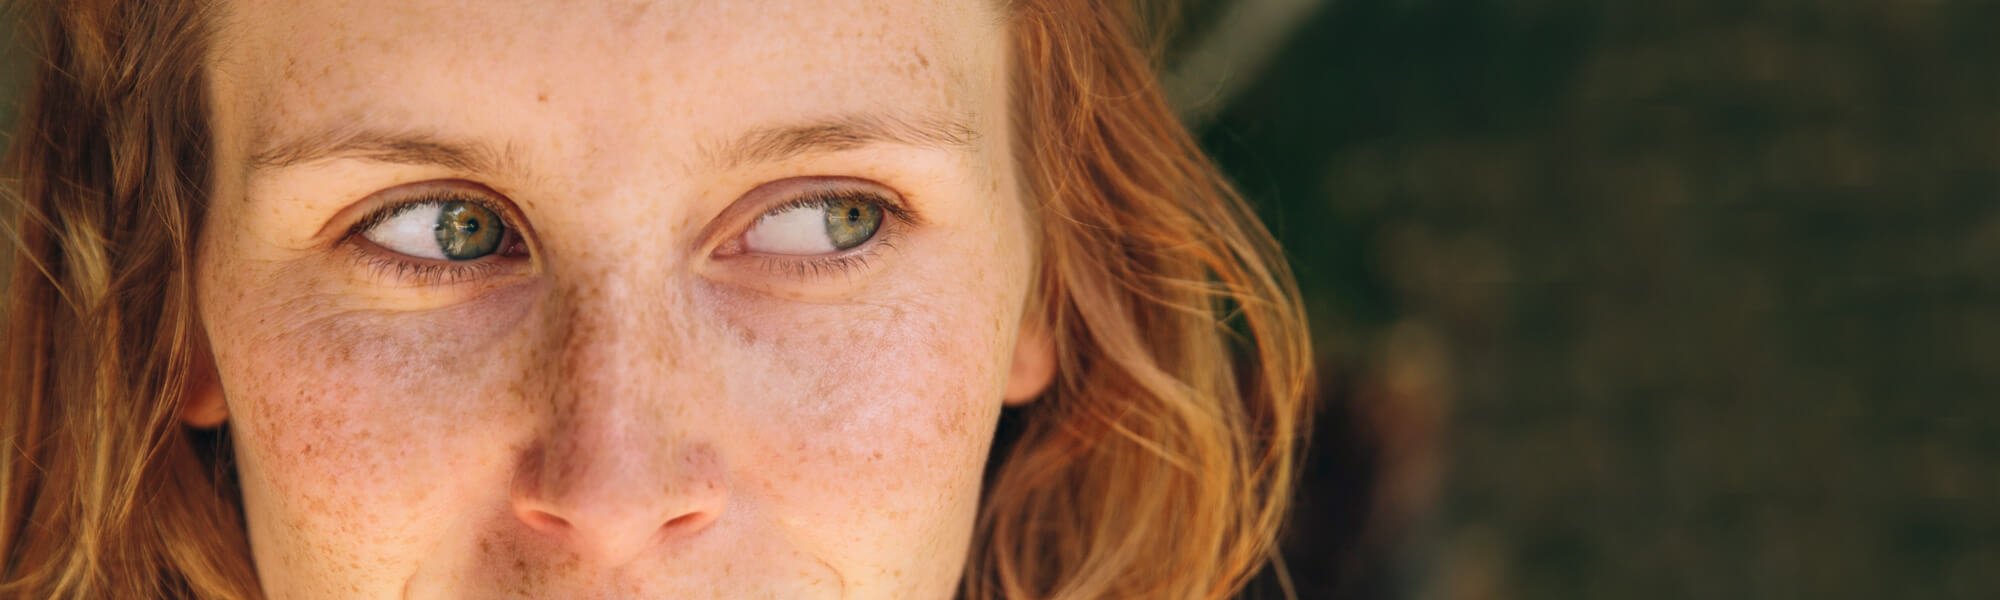 Ini Tips Dan Cara Menghilangkan Flek Hitam Di Wajah Yang Membandel